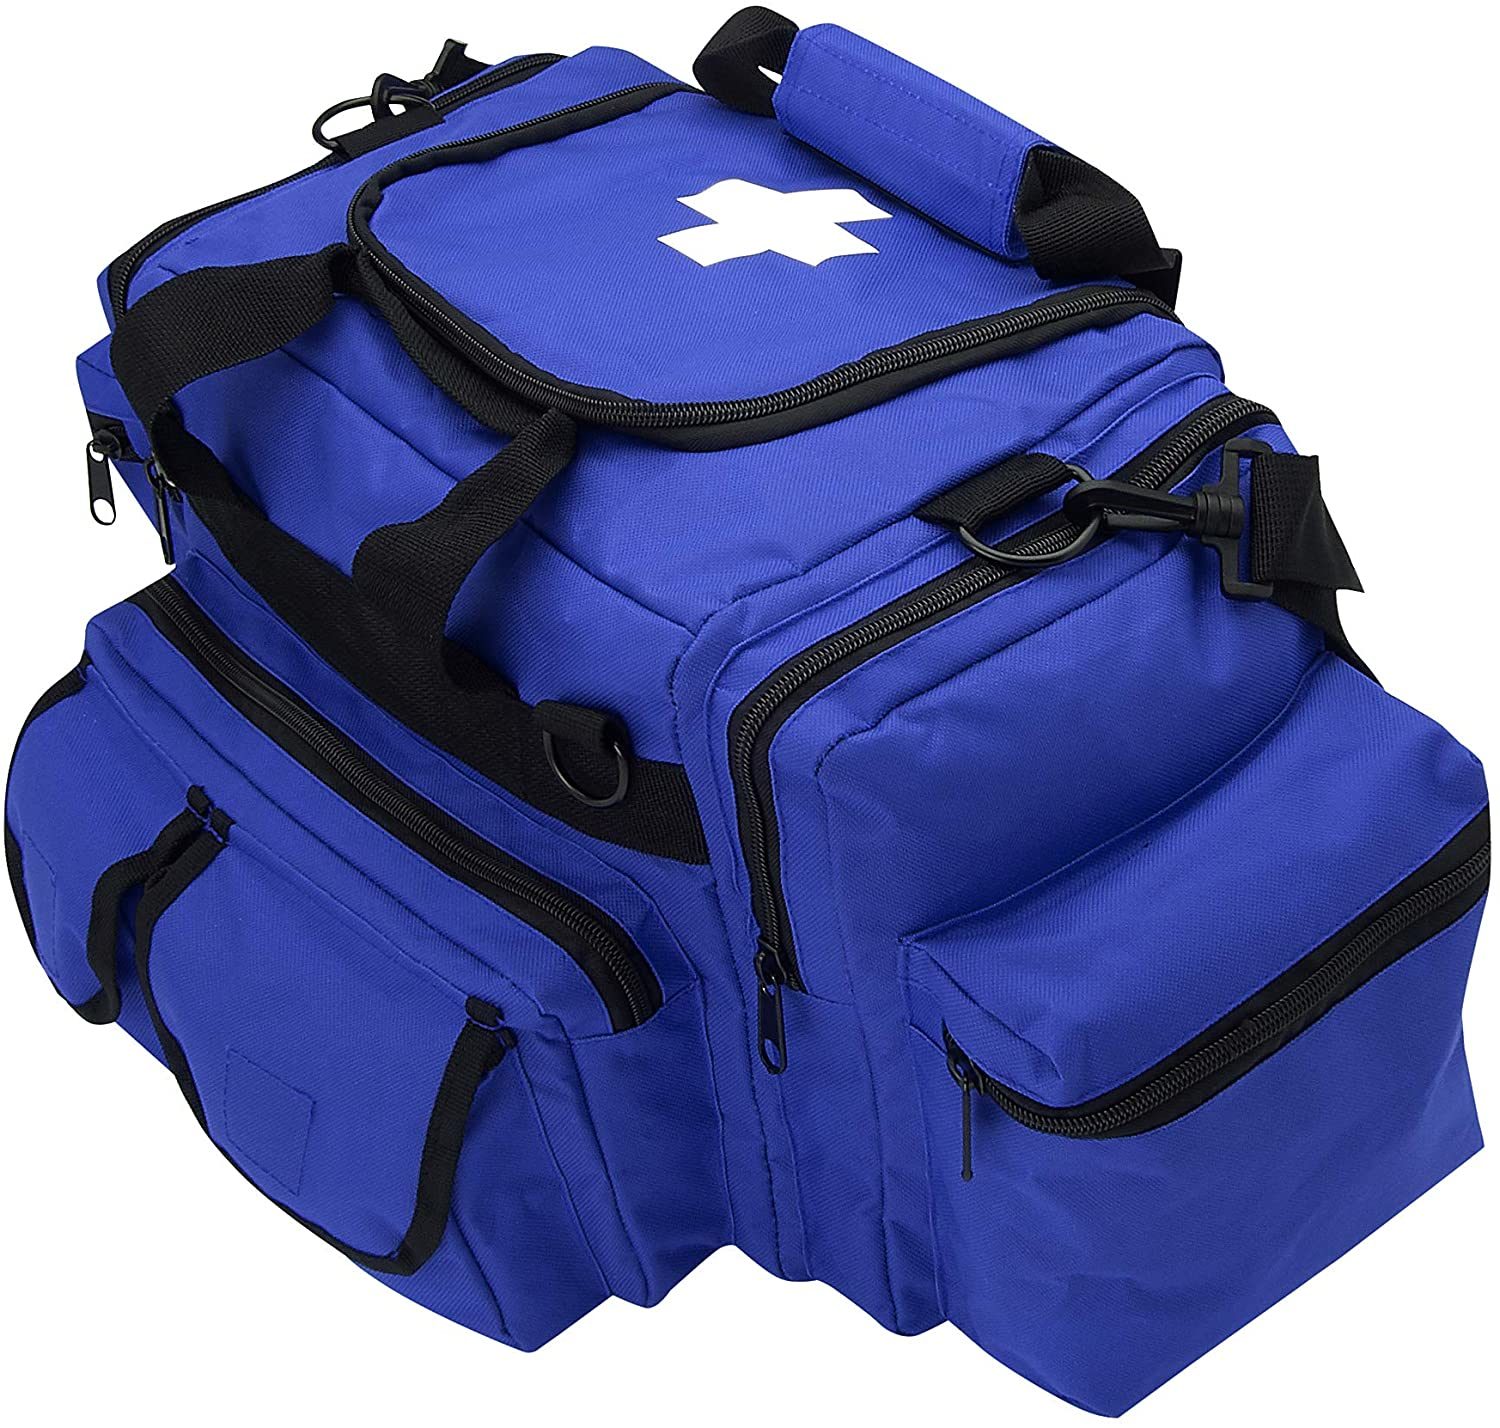 Waterproof First Aid Kit Responder EMS Emergency Medical Trauma Bag